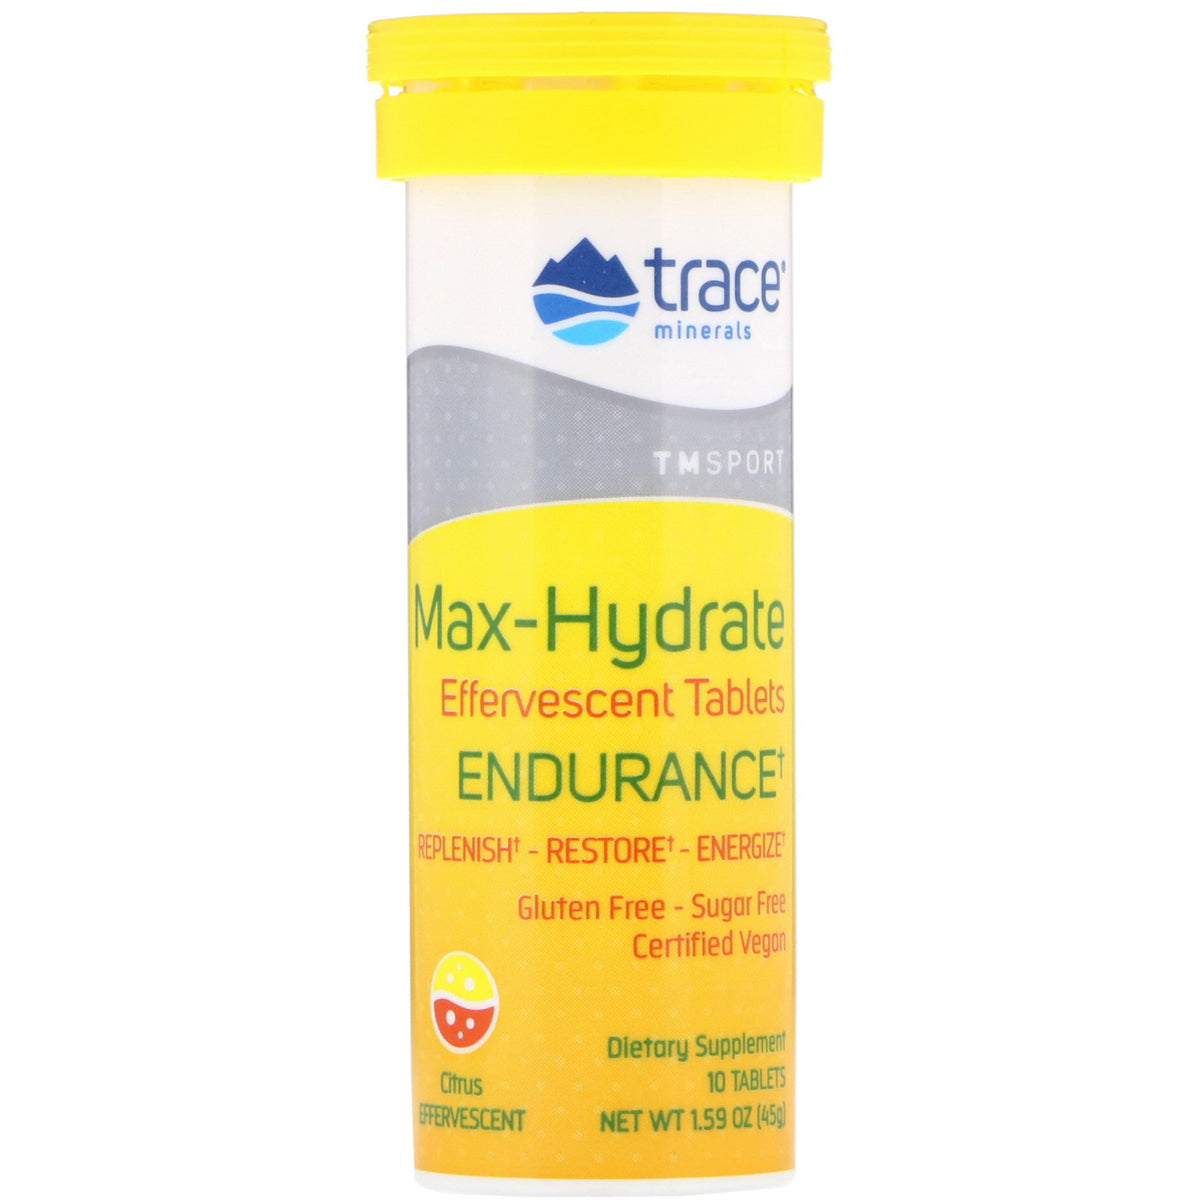 Maxhydrate Endurance